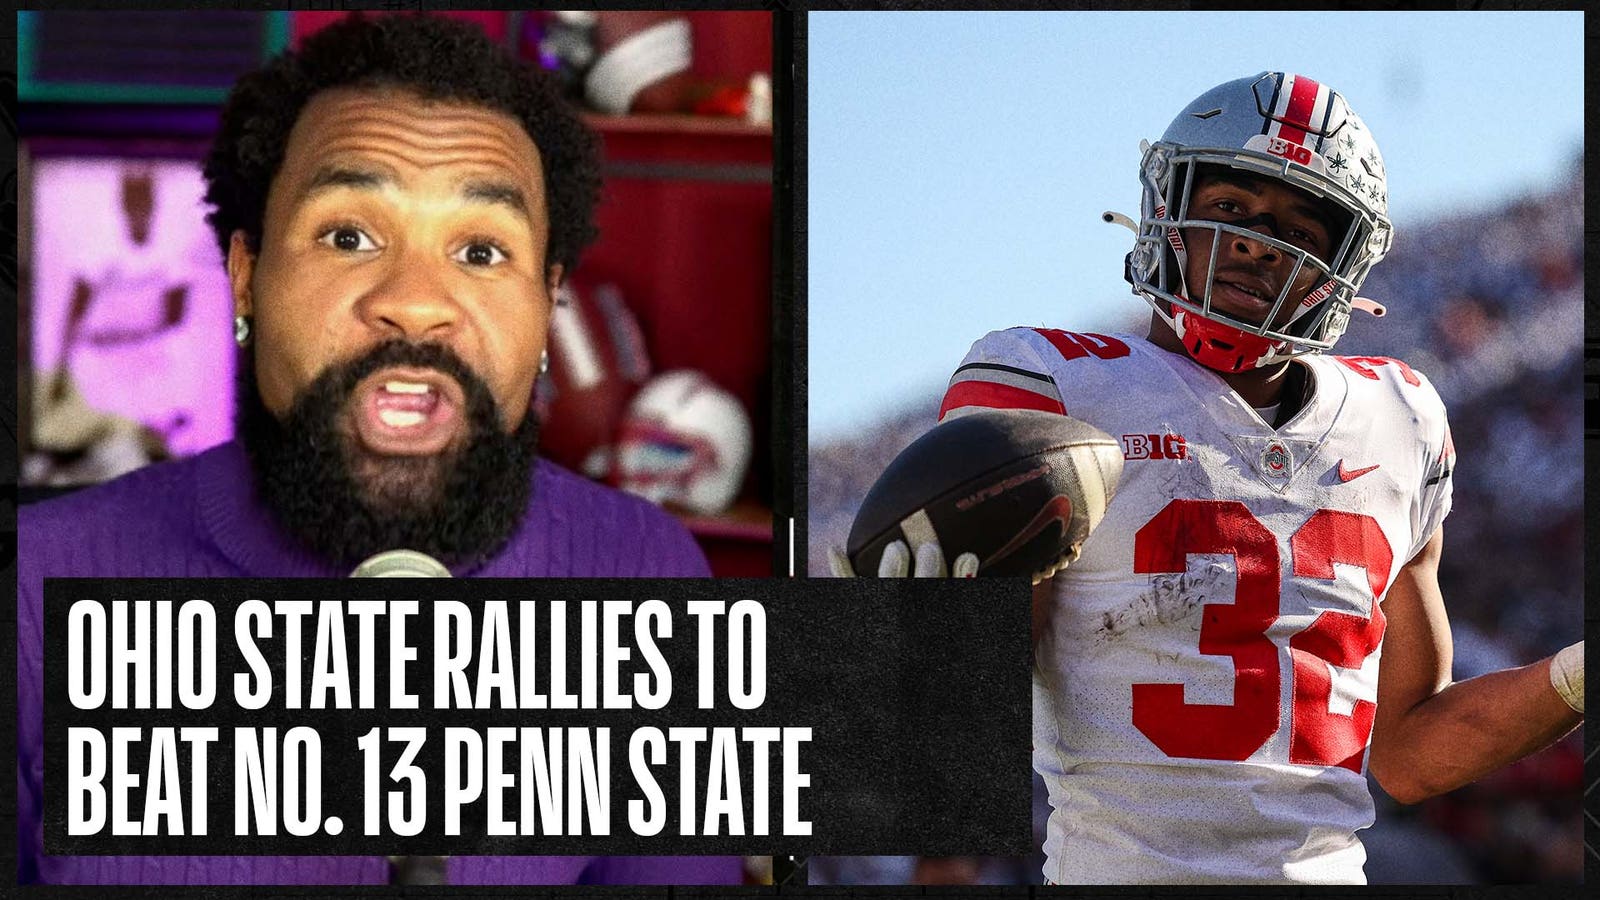 Ohio State rallies past Penn State